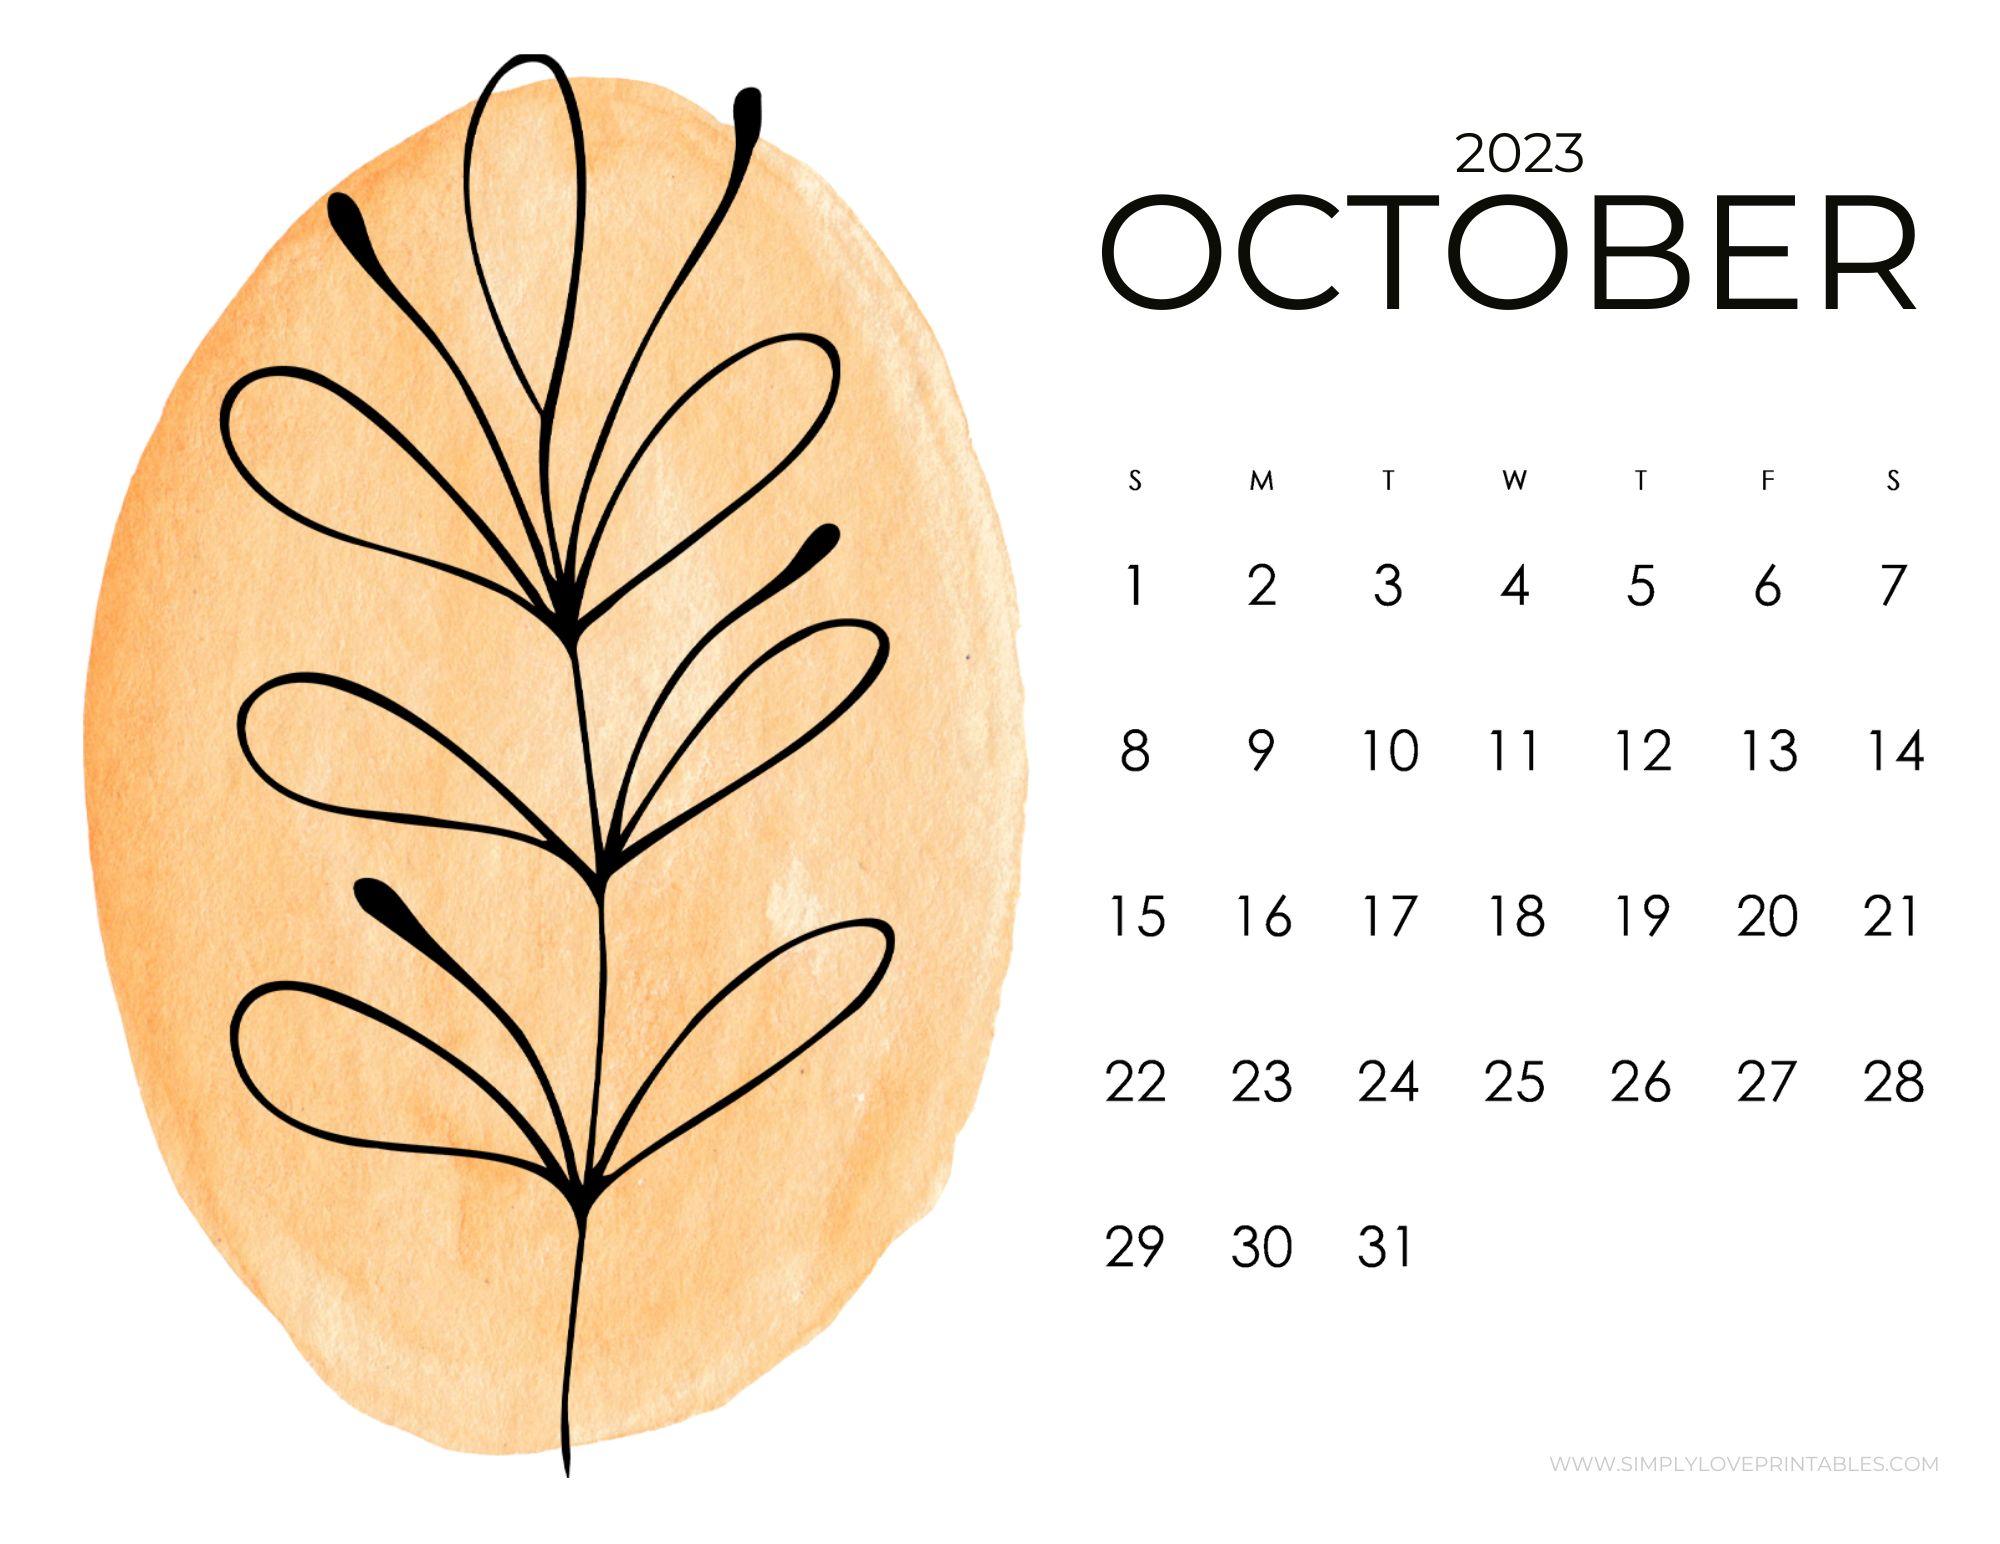 October 2023 Calendars Simply Love Printables